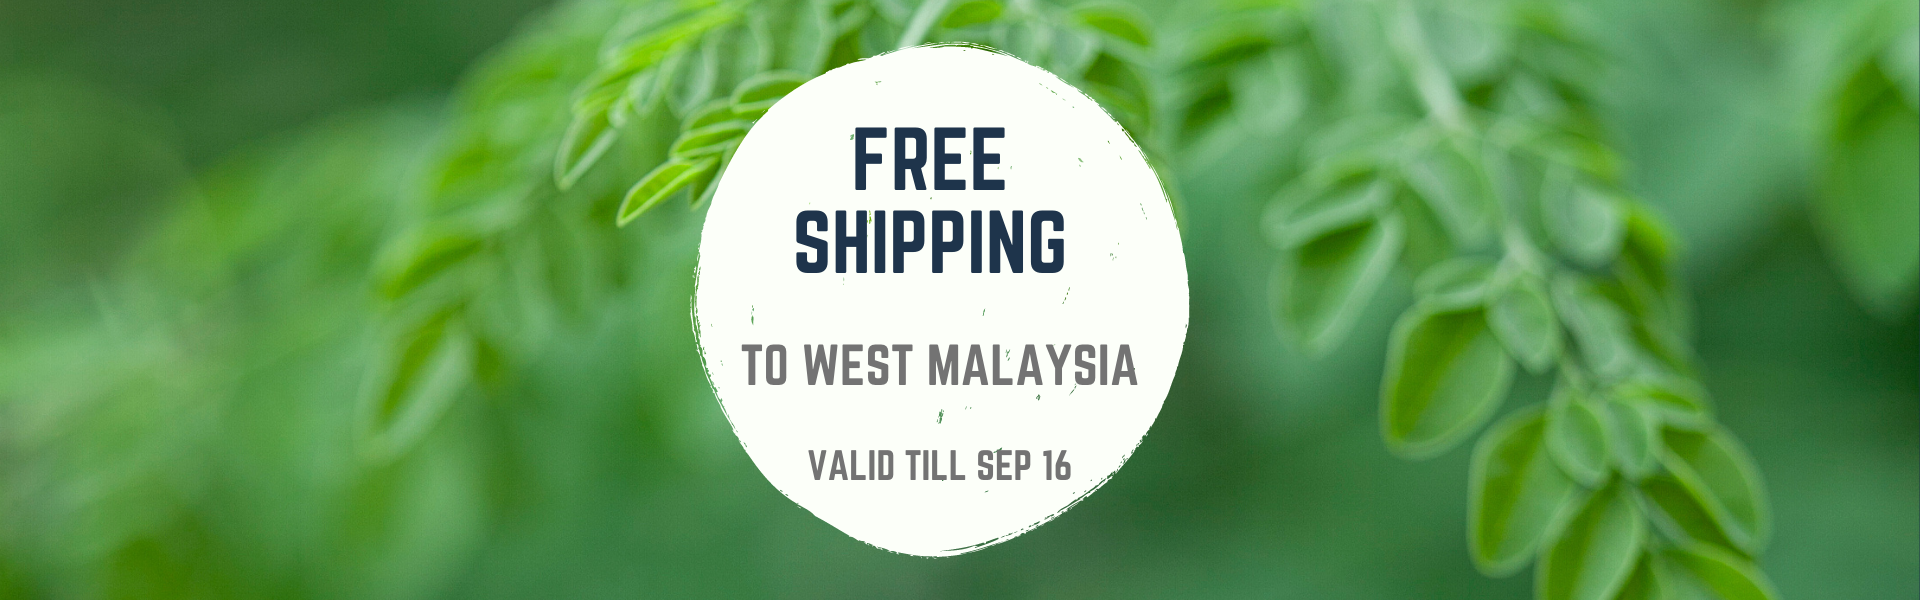 WEB Free Shipping 16 Sep .png